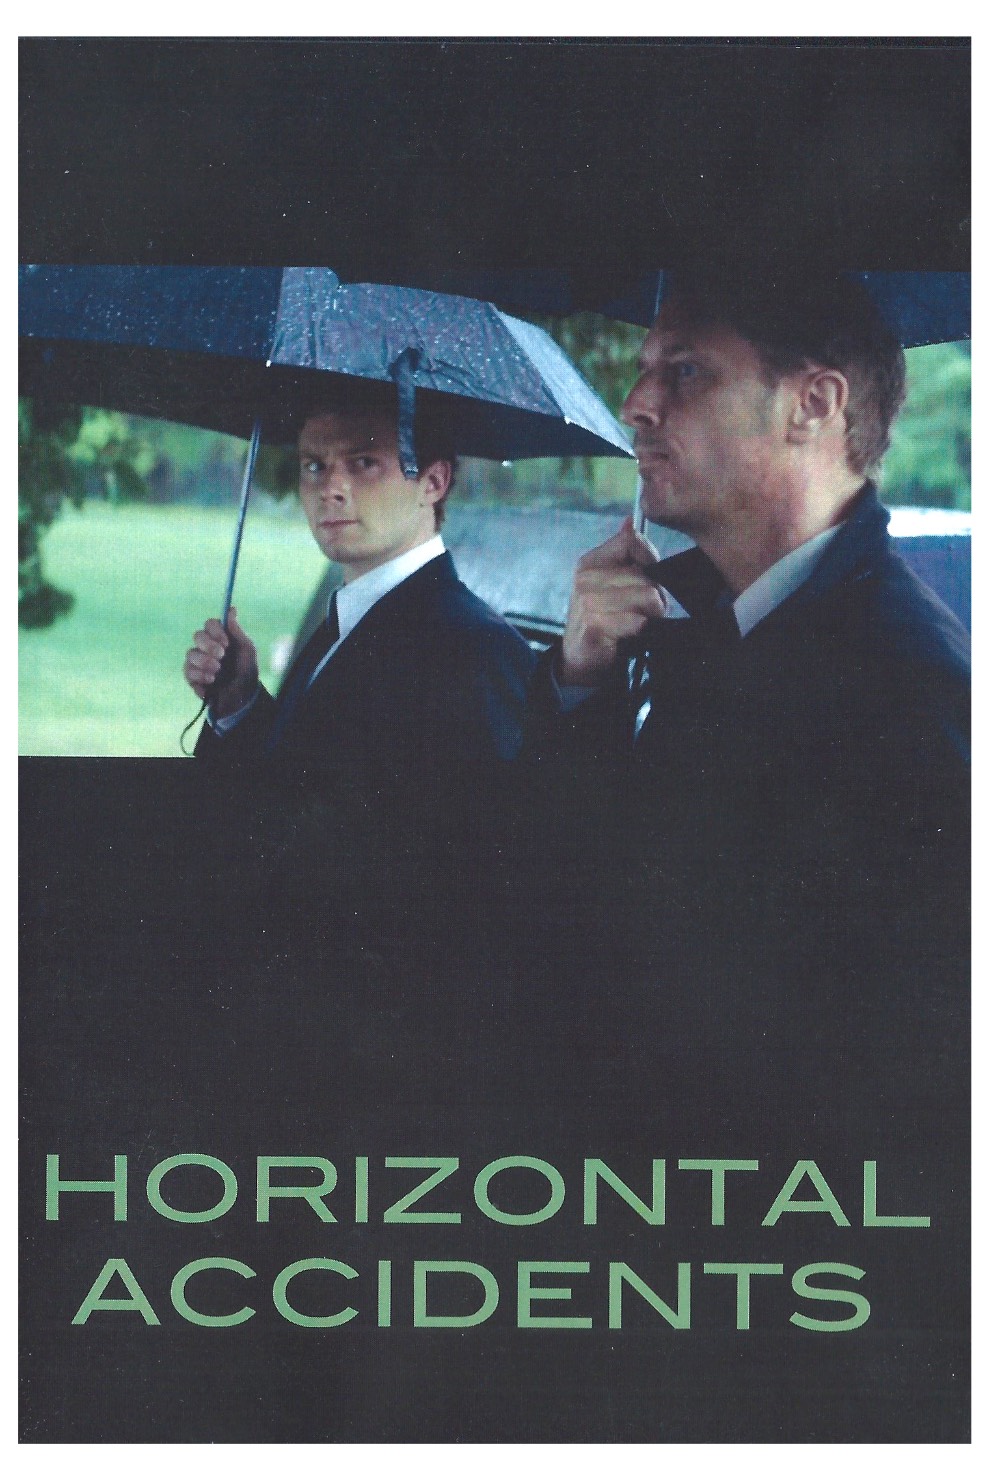 Horizontal Accidents film promo image